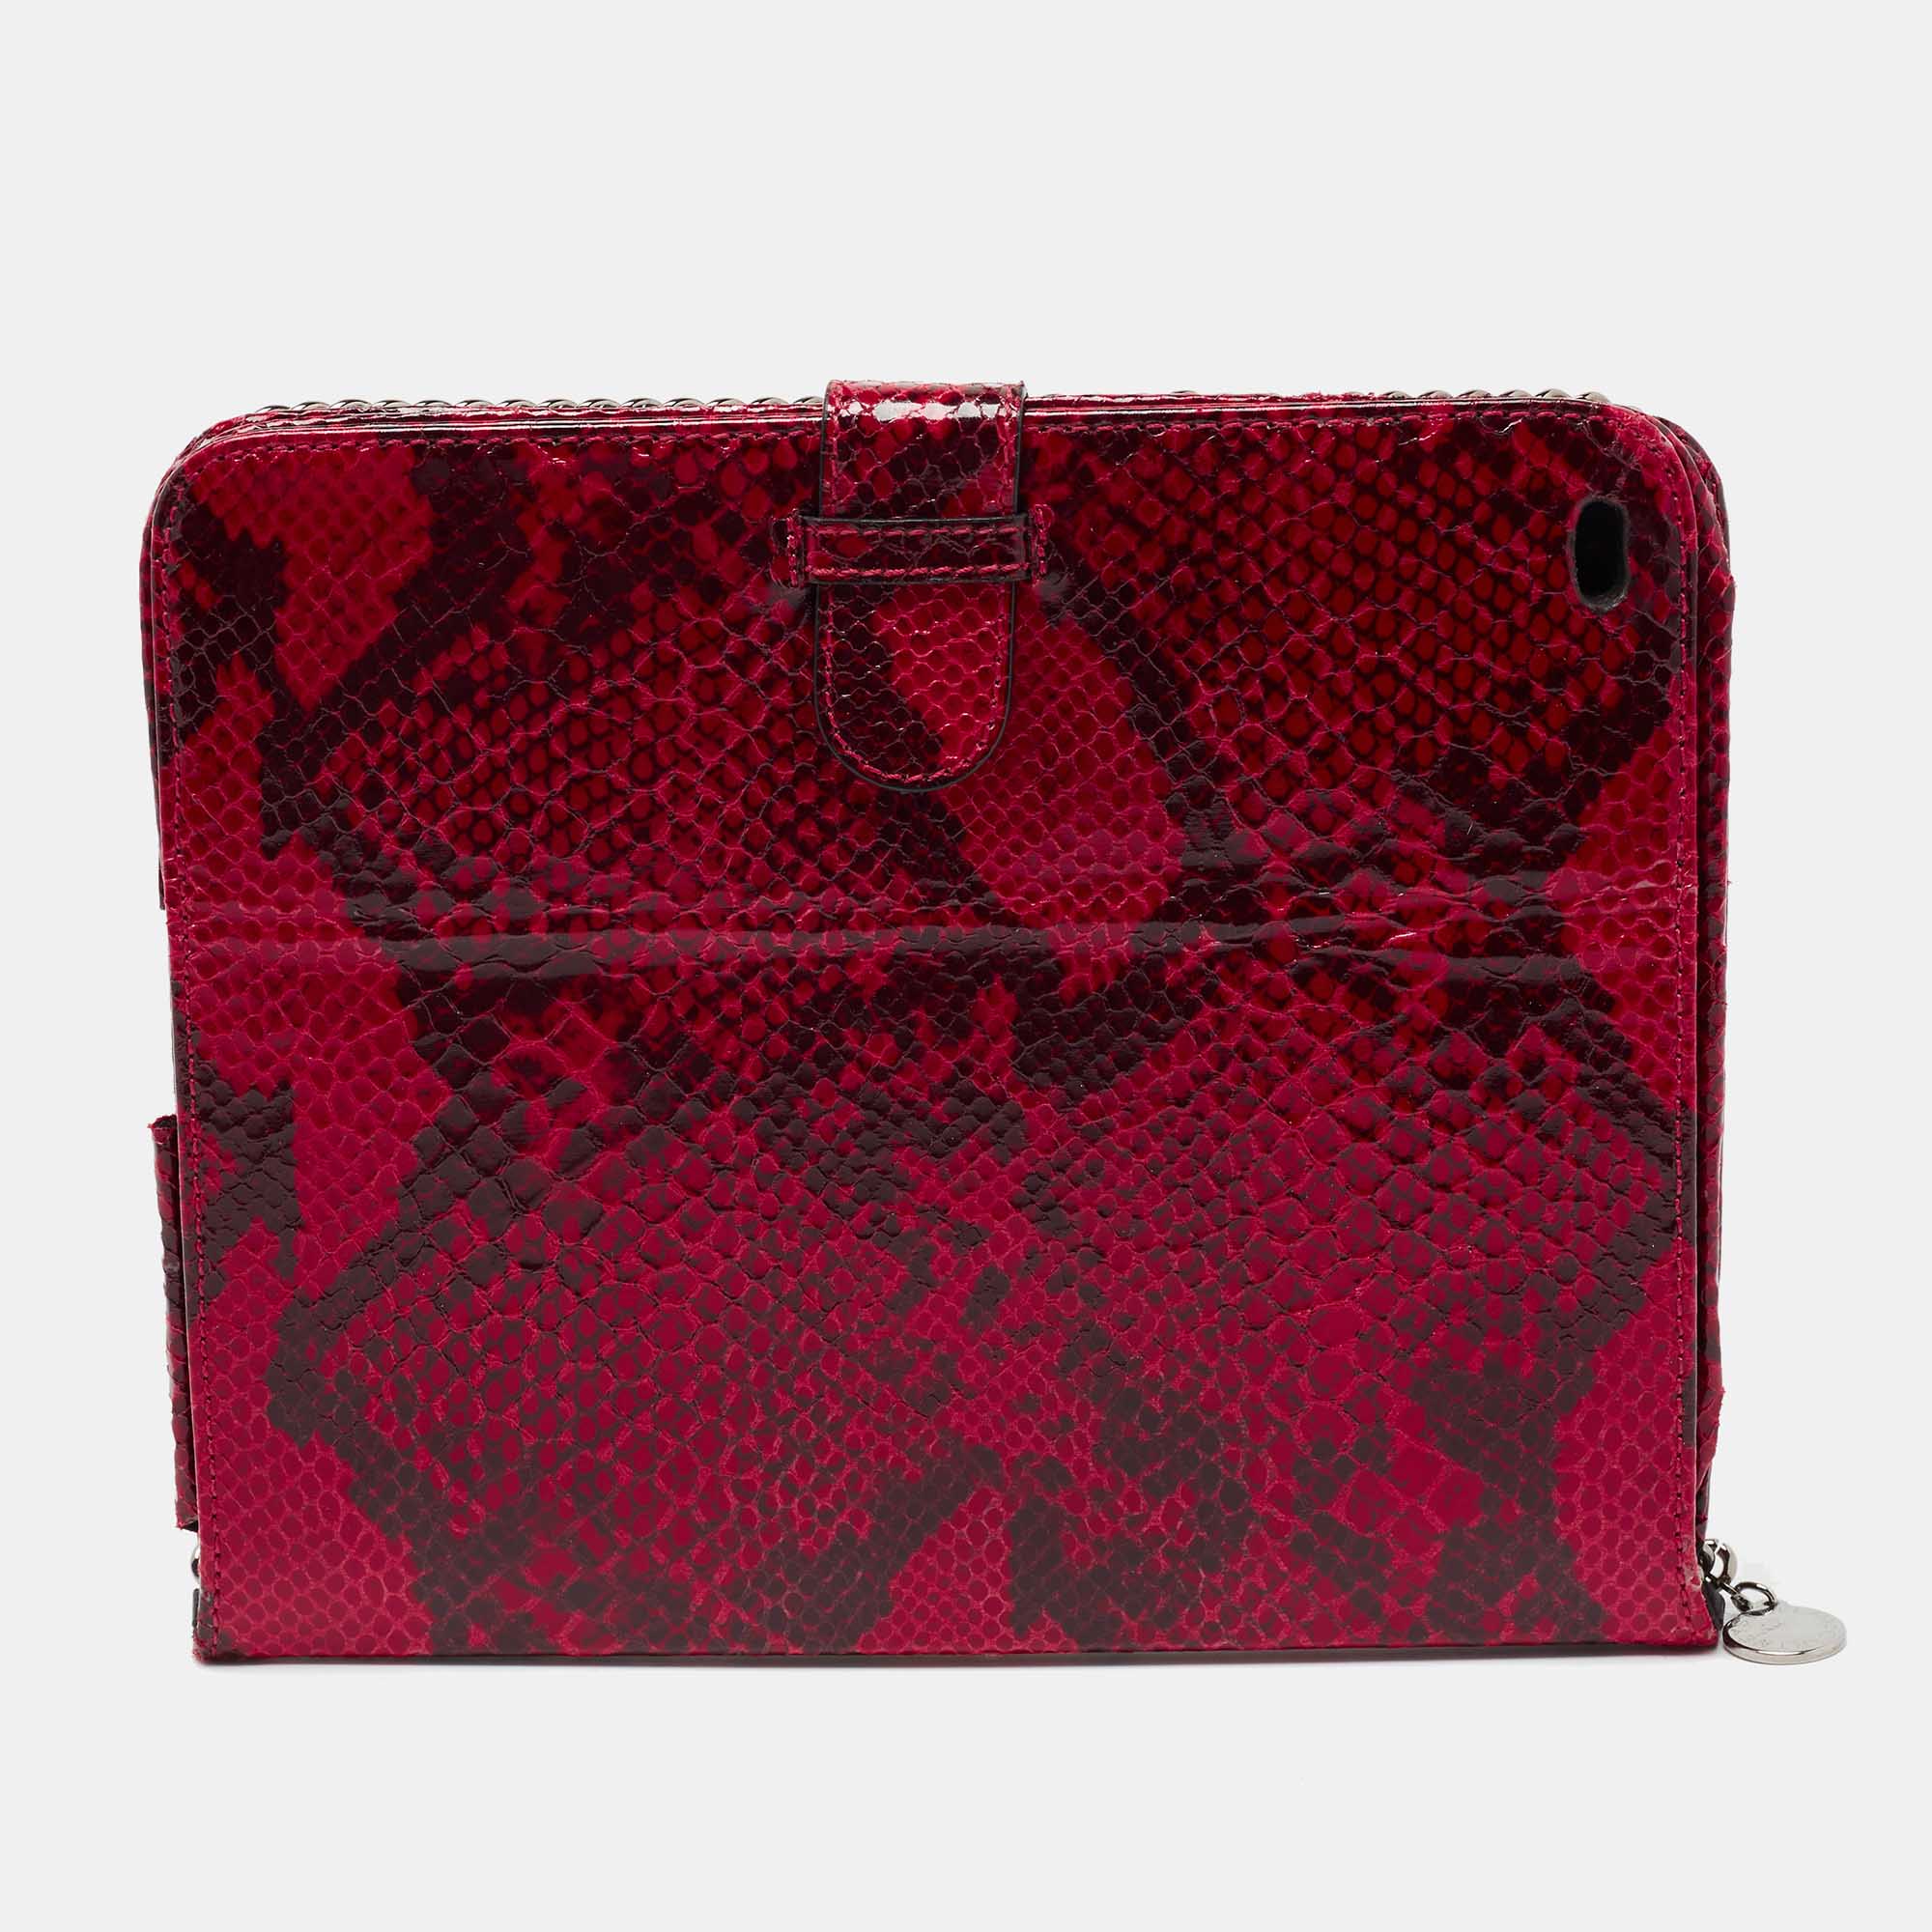 

Stella McCartney Red Faux Python Leather Falabella iPad 2 Case Holder